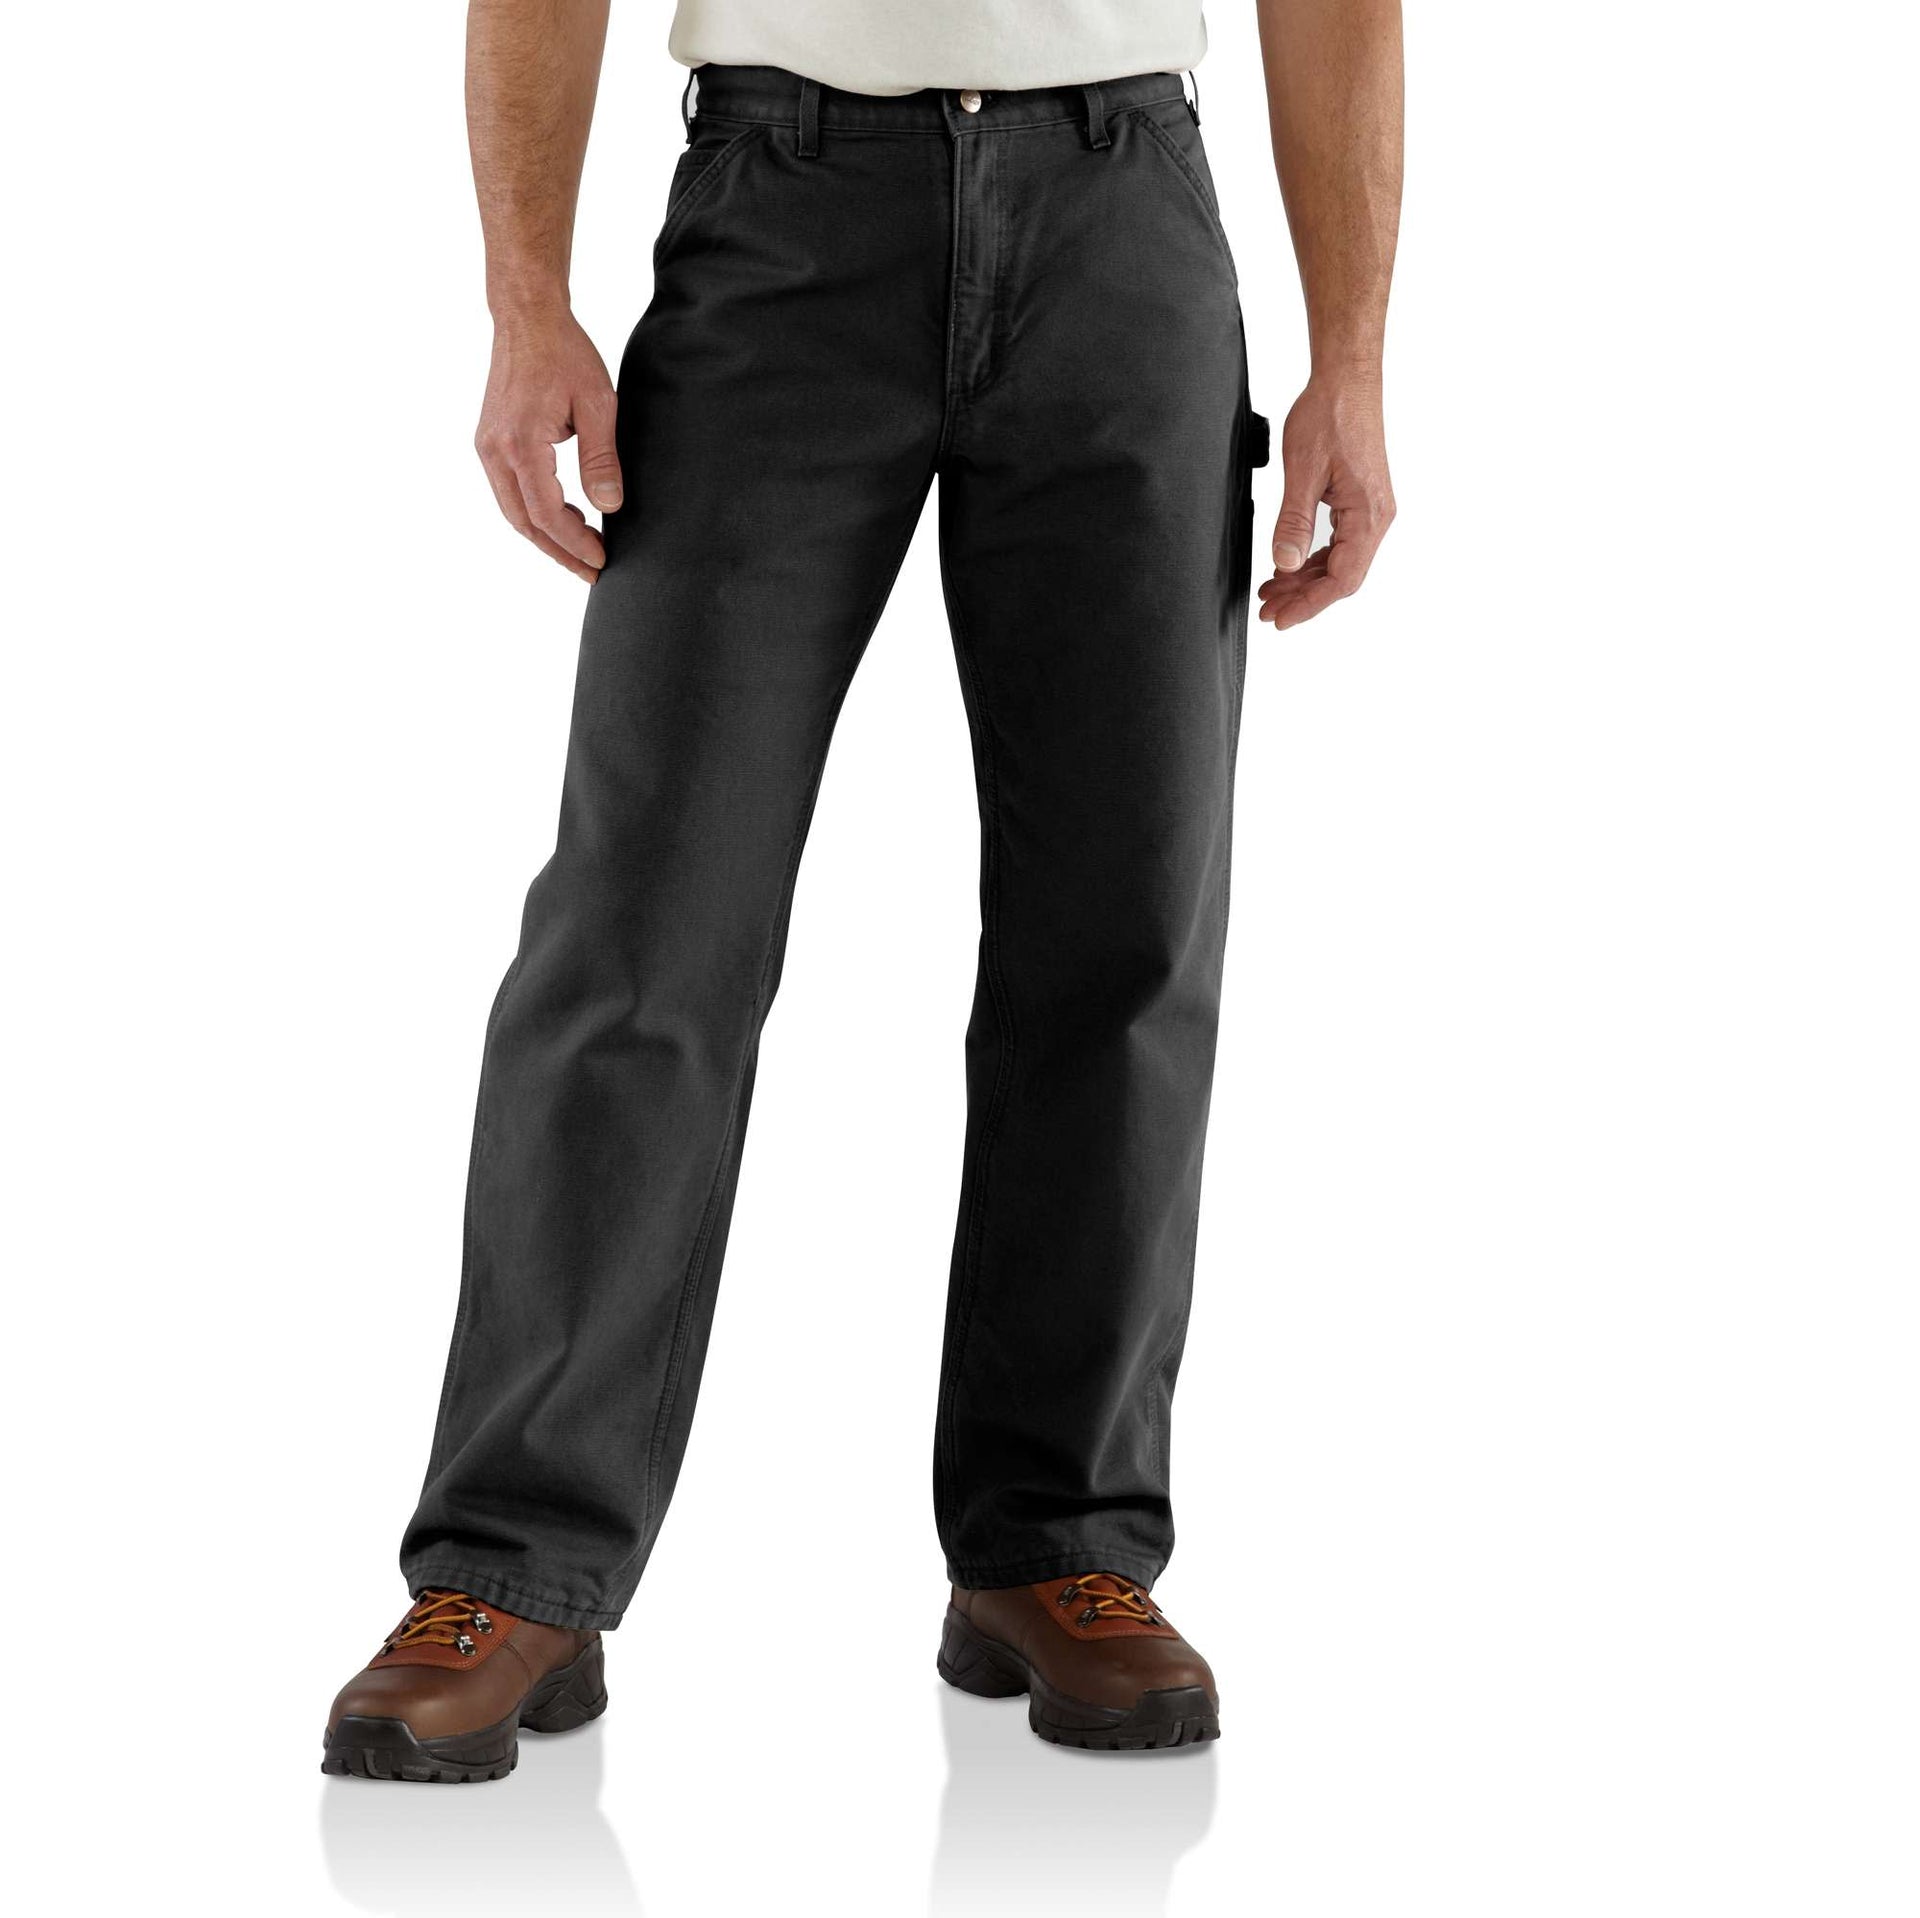 Carhartt Pants: Men's B194 211 Brown Cotton Duck Insulated Waist Overall  Quilt Lined Pants